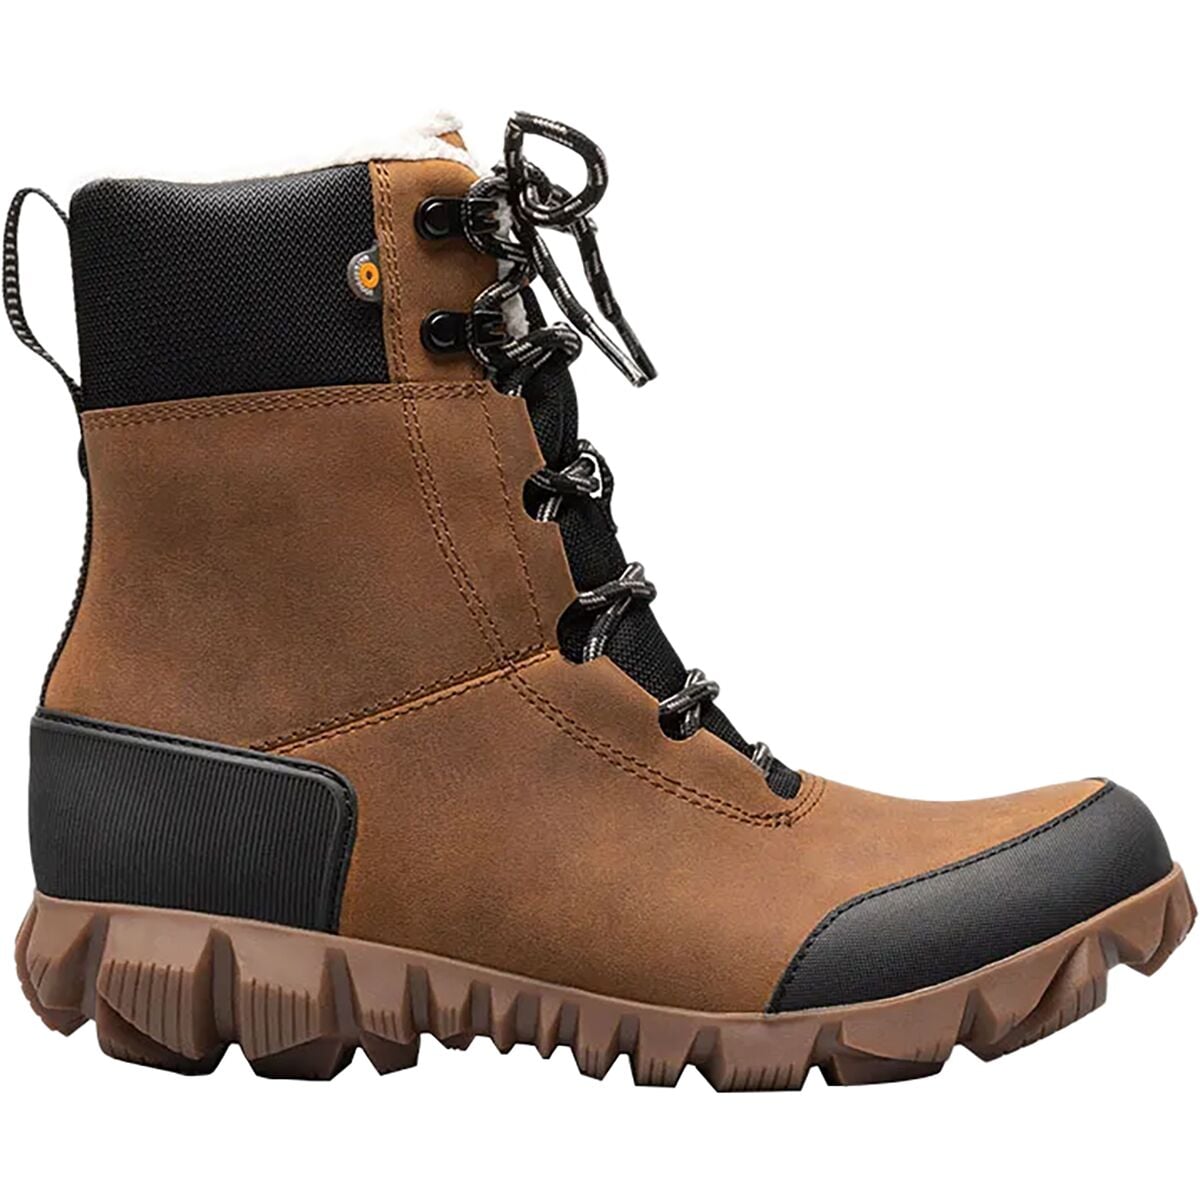 Arcata Urban Leather Tall Boot - Women